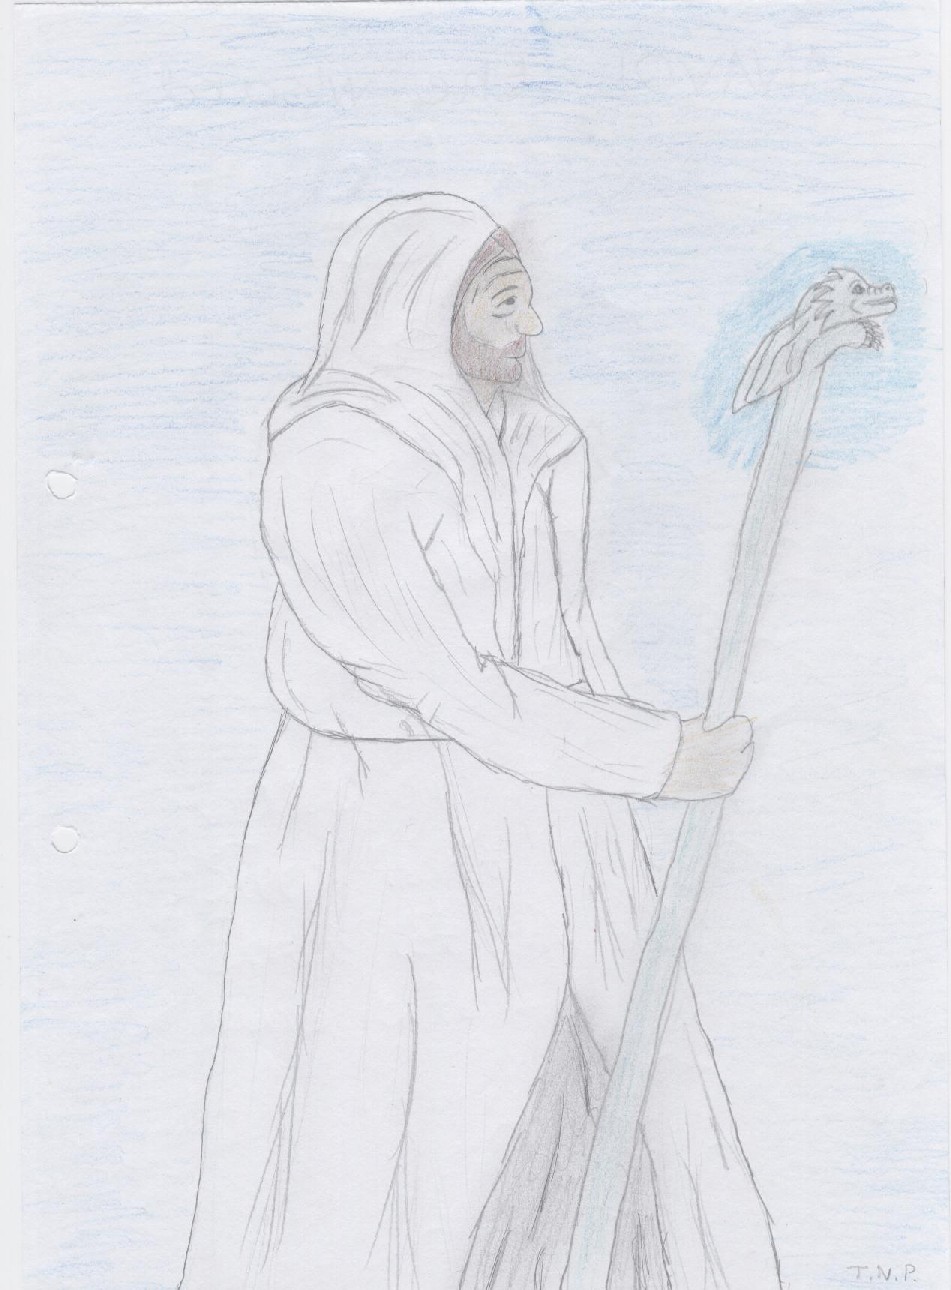 Anavol The Druid by silvereye